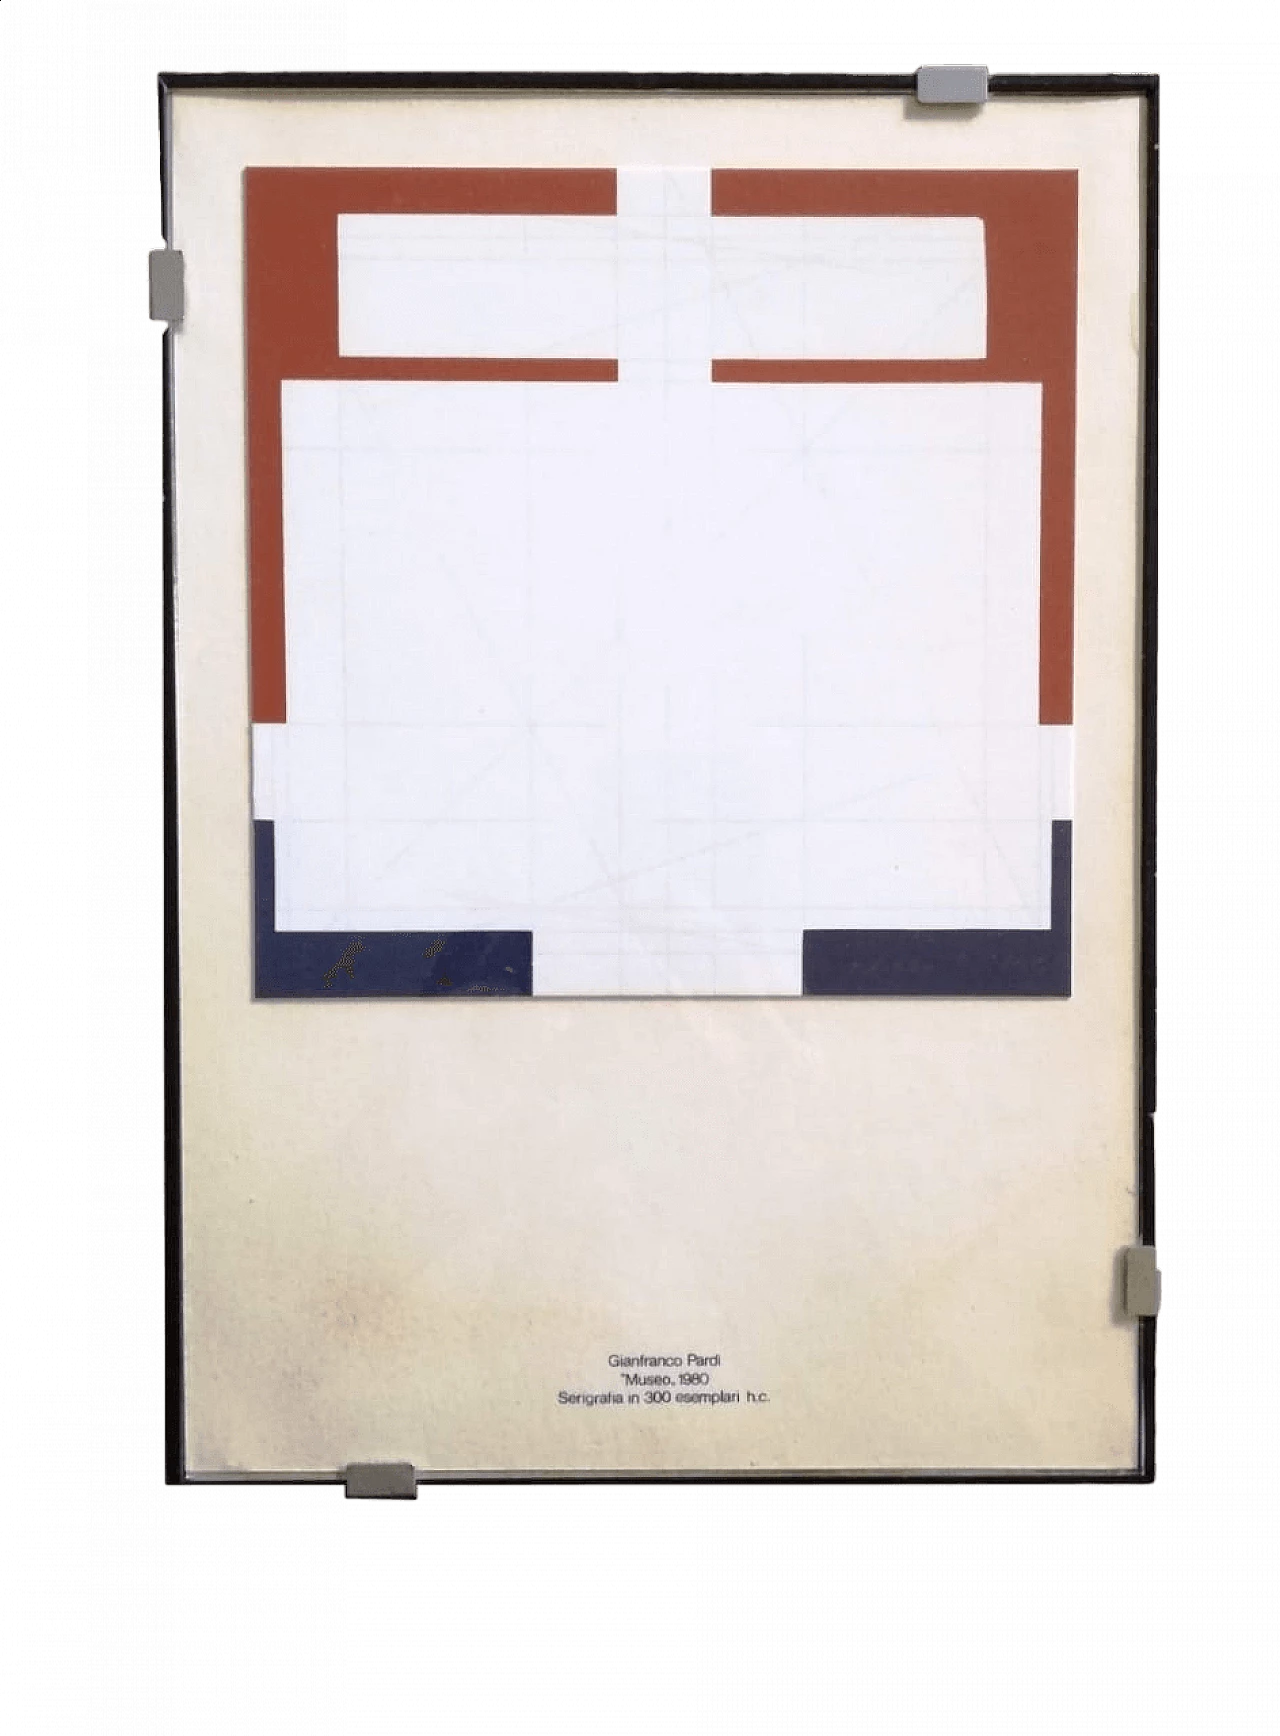 Gianfranco Pardi, Museo, serigrafia, 1980 7